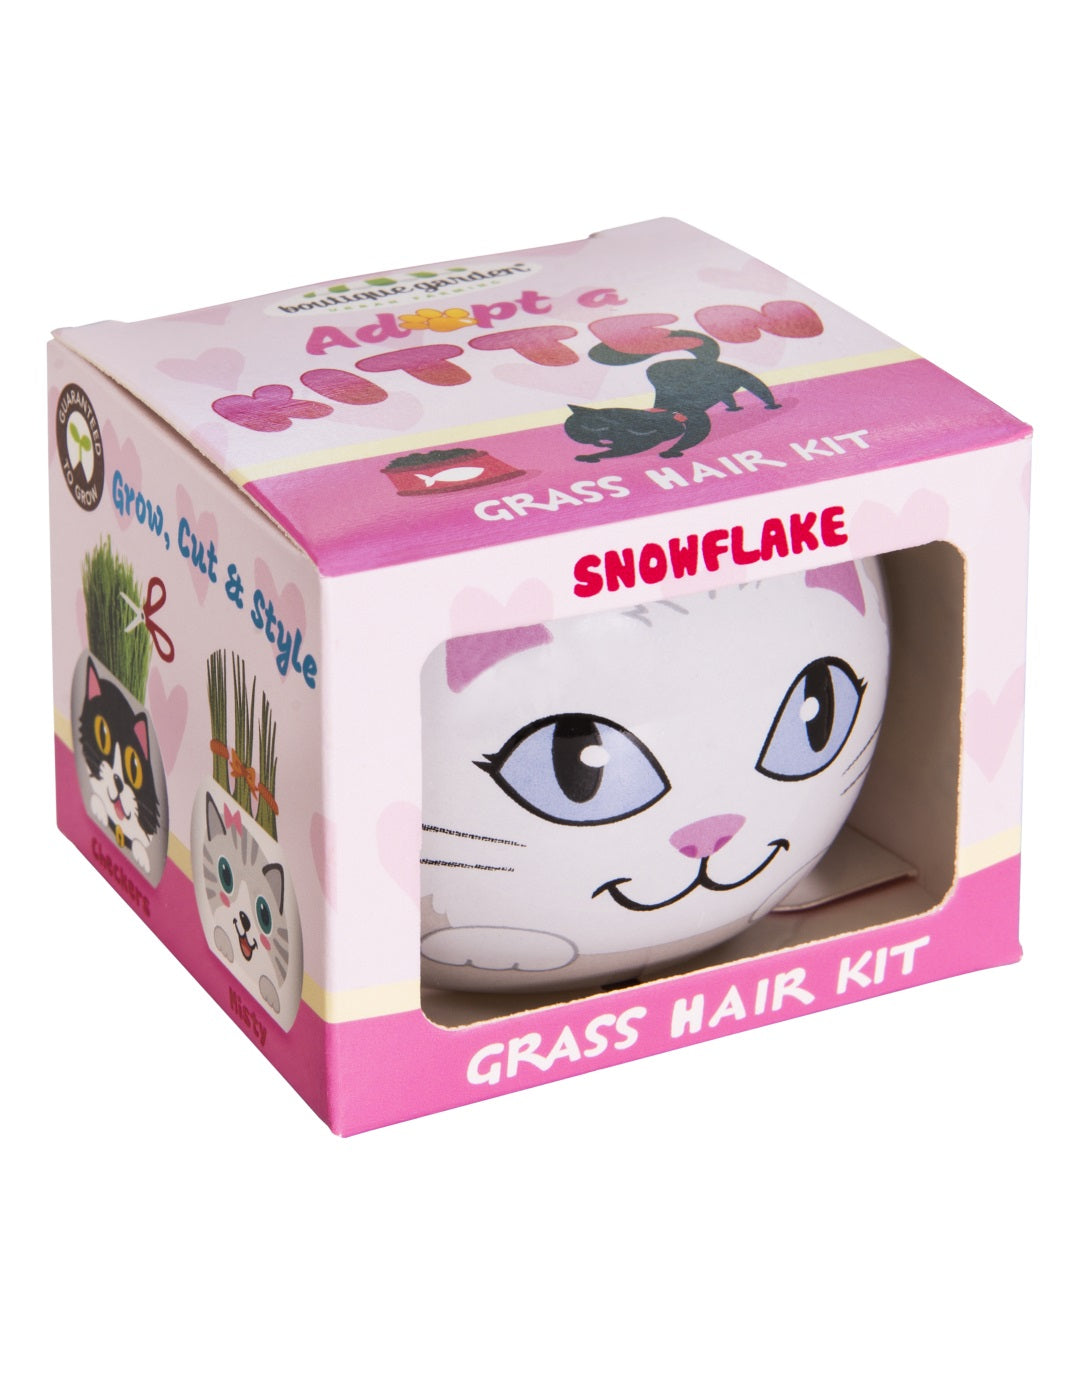 Grass Hair Kit - Kittens (Snowflake)